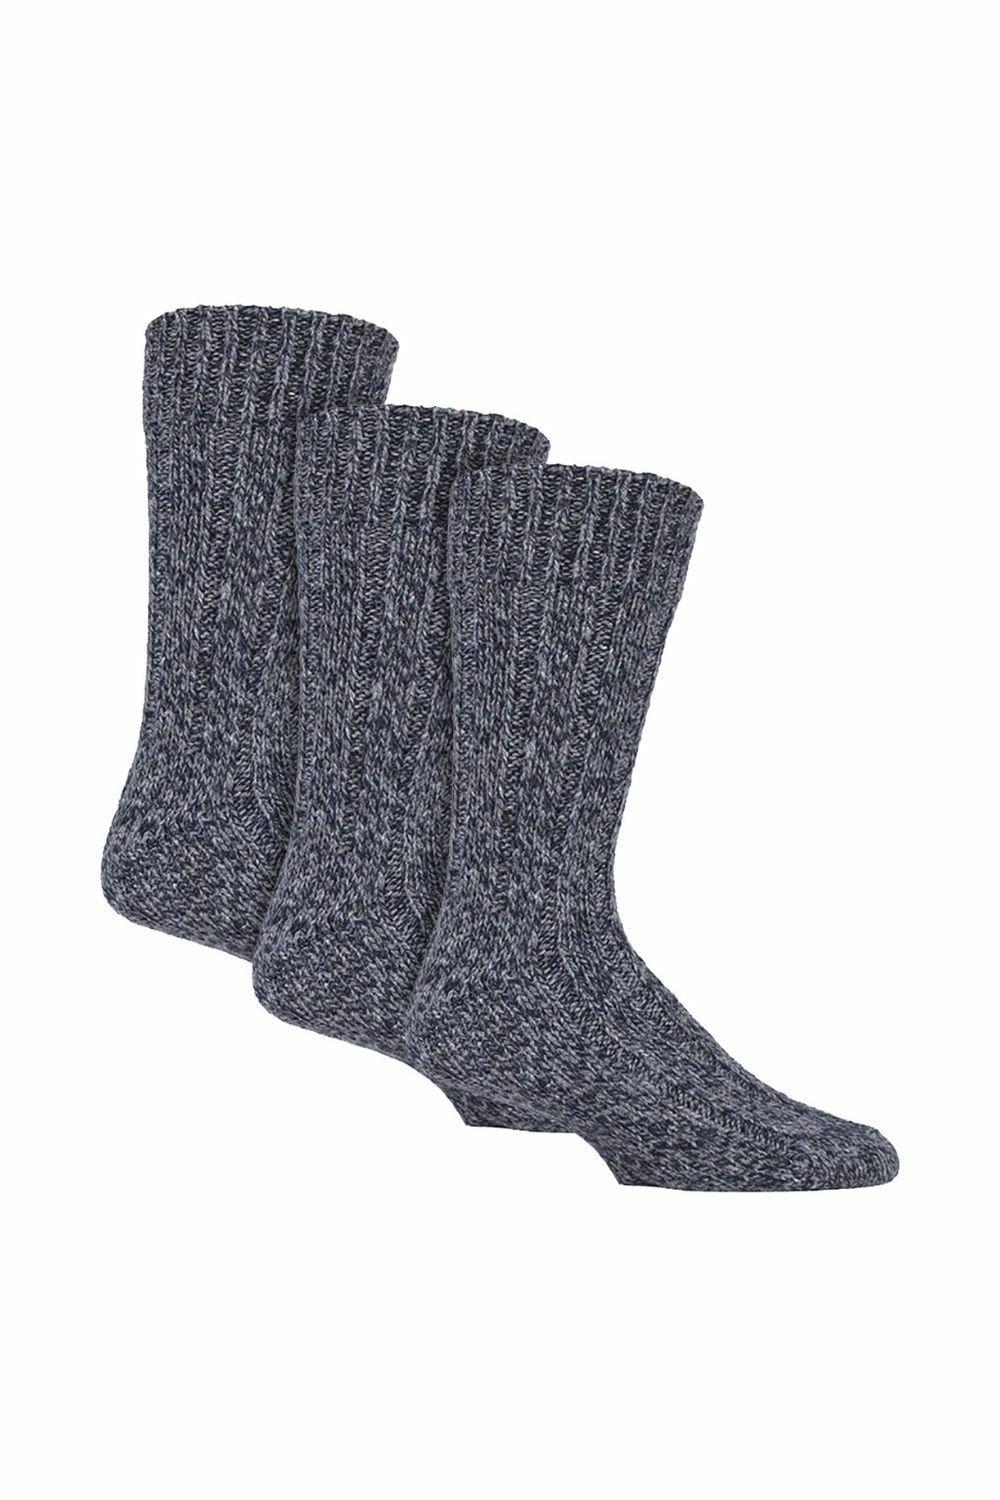 3 Pair Multipack Soft Wool Hiking Boot Socks